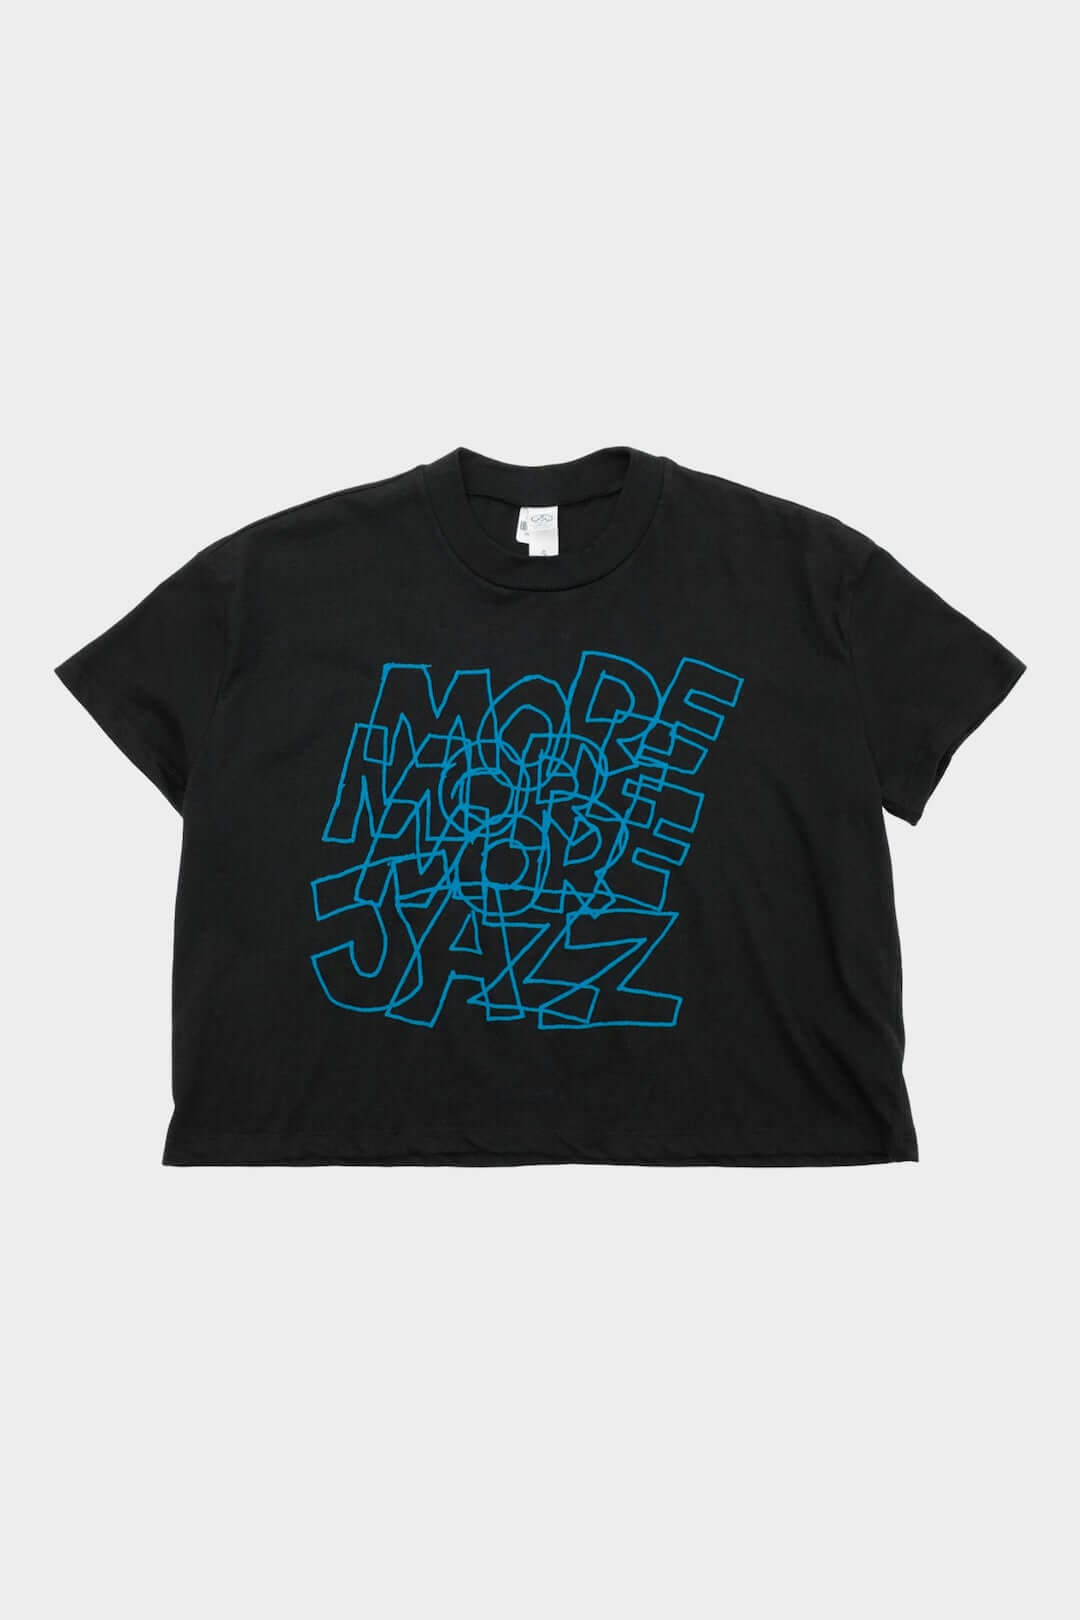 More More Jazz Crop Top - Shirt - DNO